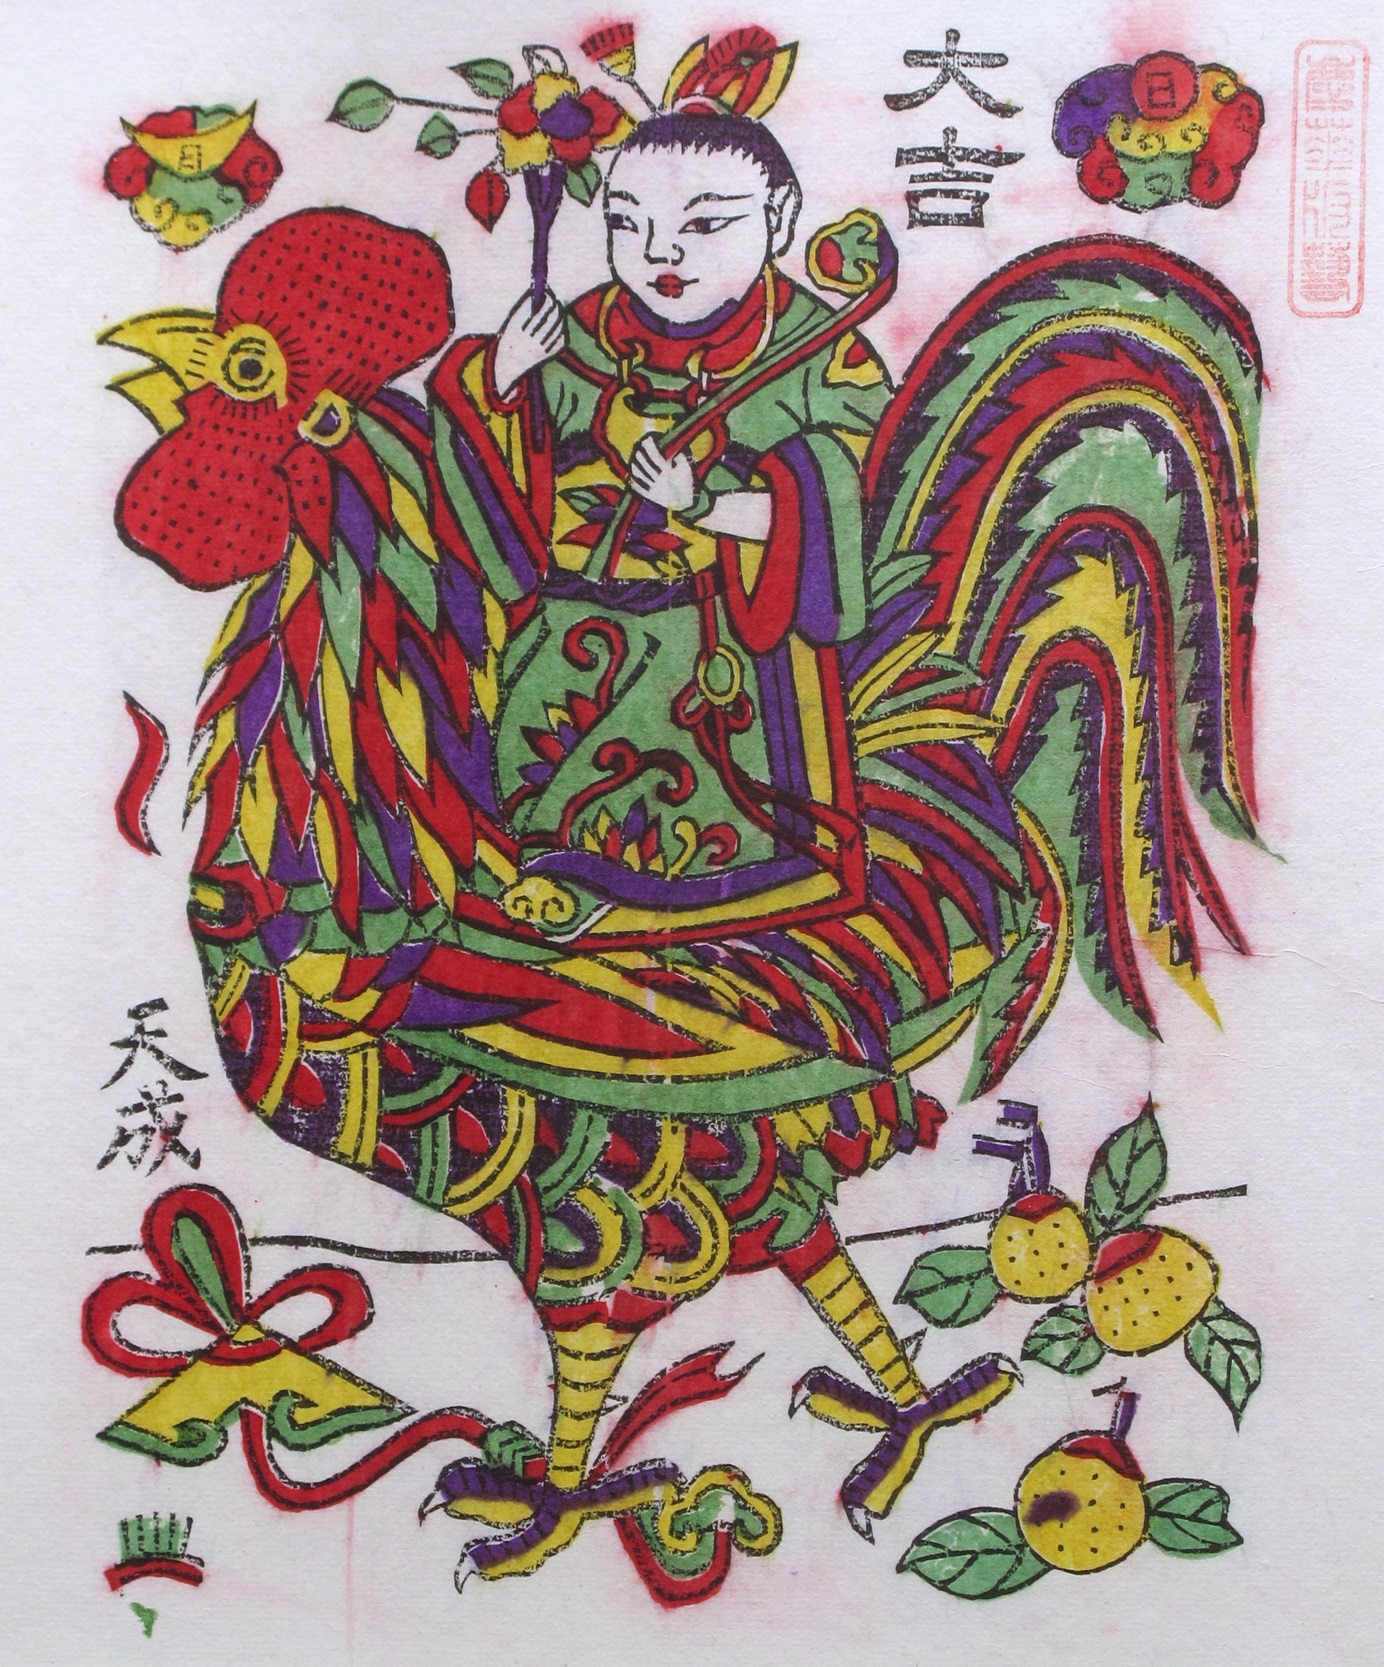 Public Lecture - Popular Chinese Woodblock Prints: Folk Art, Gods, and Propaganda